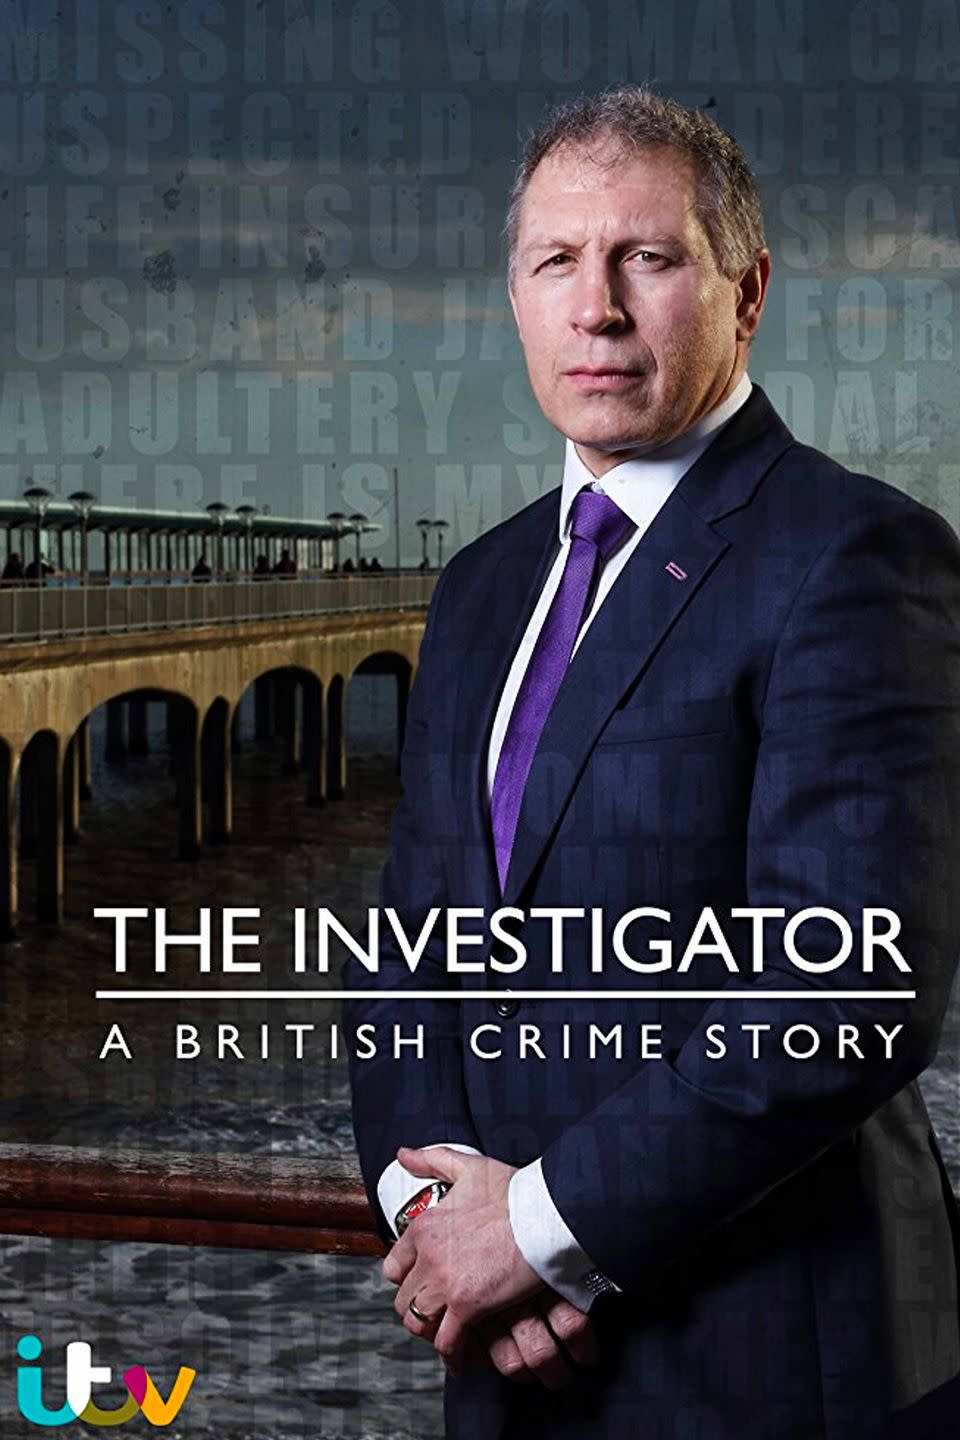 9) The Investigator: A British Crime Story